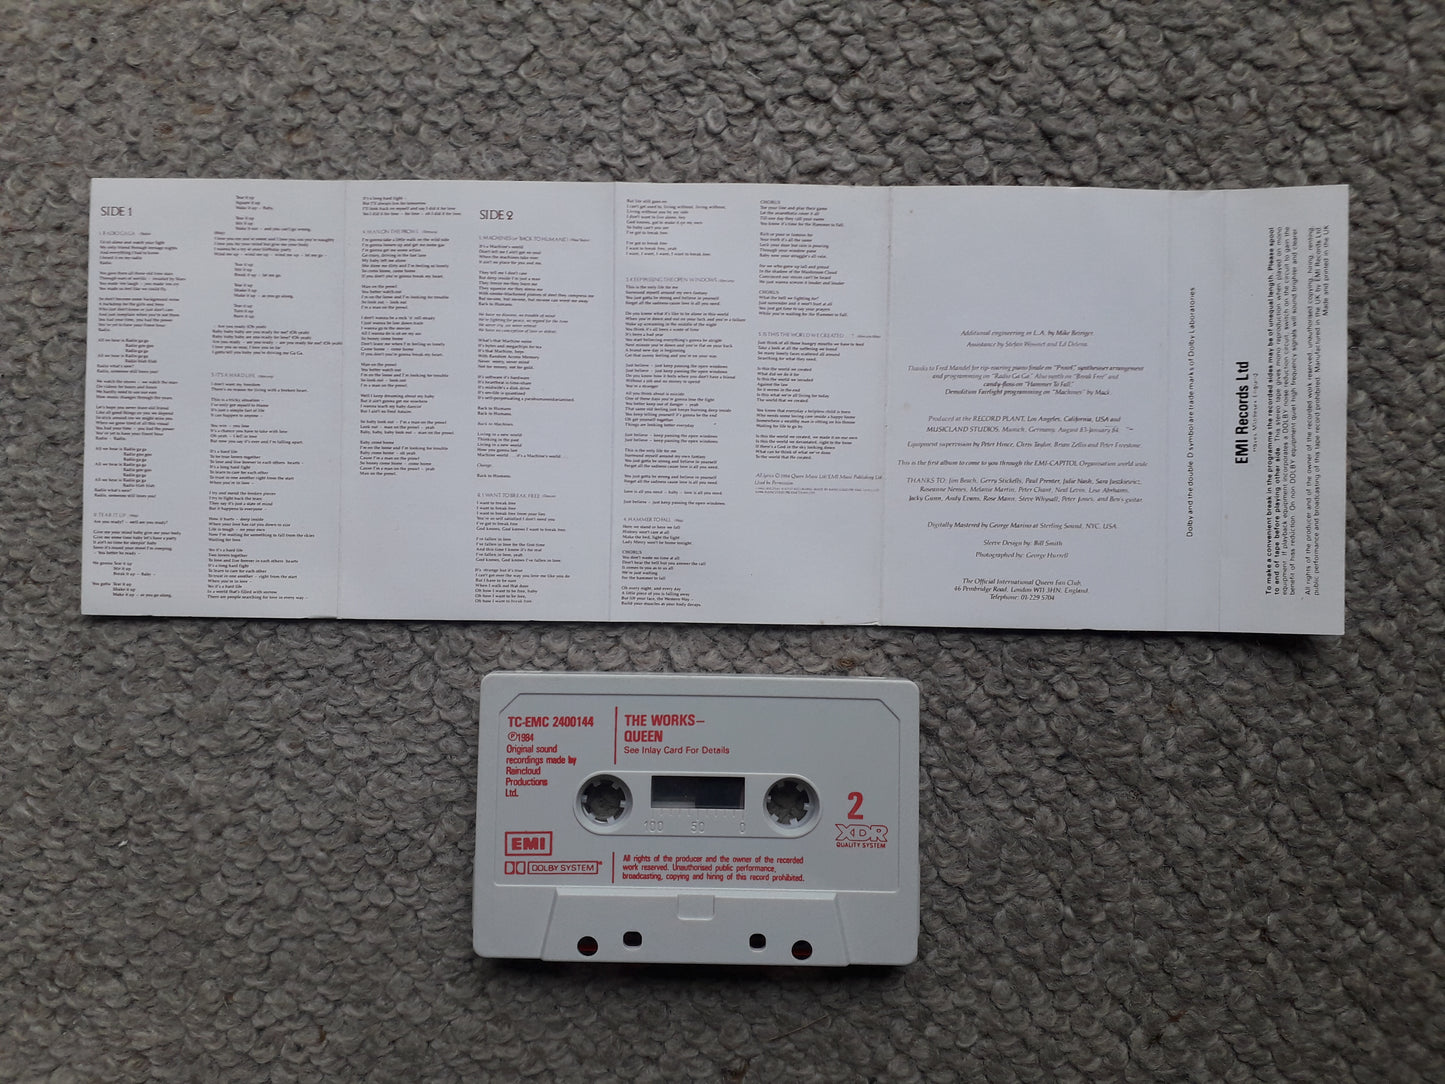 Queen-The Works Cassette (TC-EMC 24 0014 4)